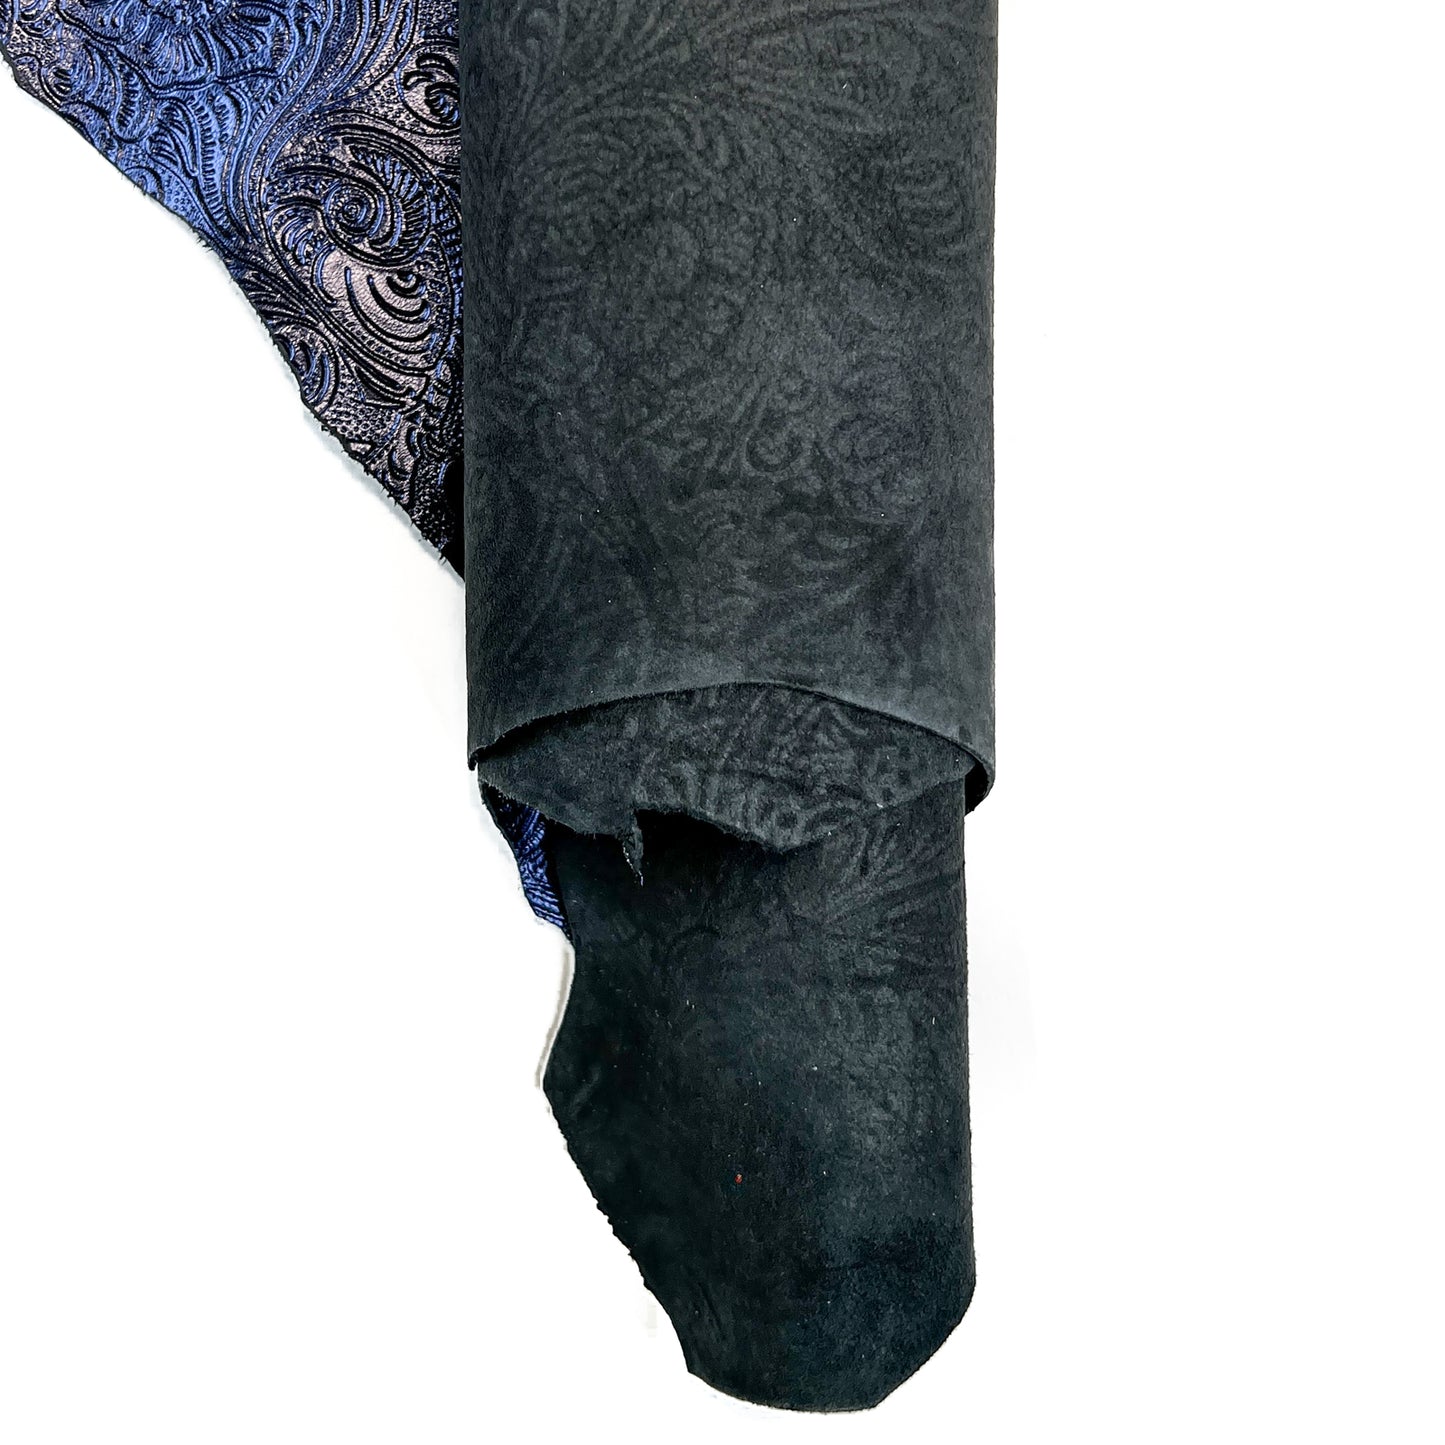 Dark BLUE Metallic Leather With Flower Print / BLUEBERRY FLOWERS 1518